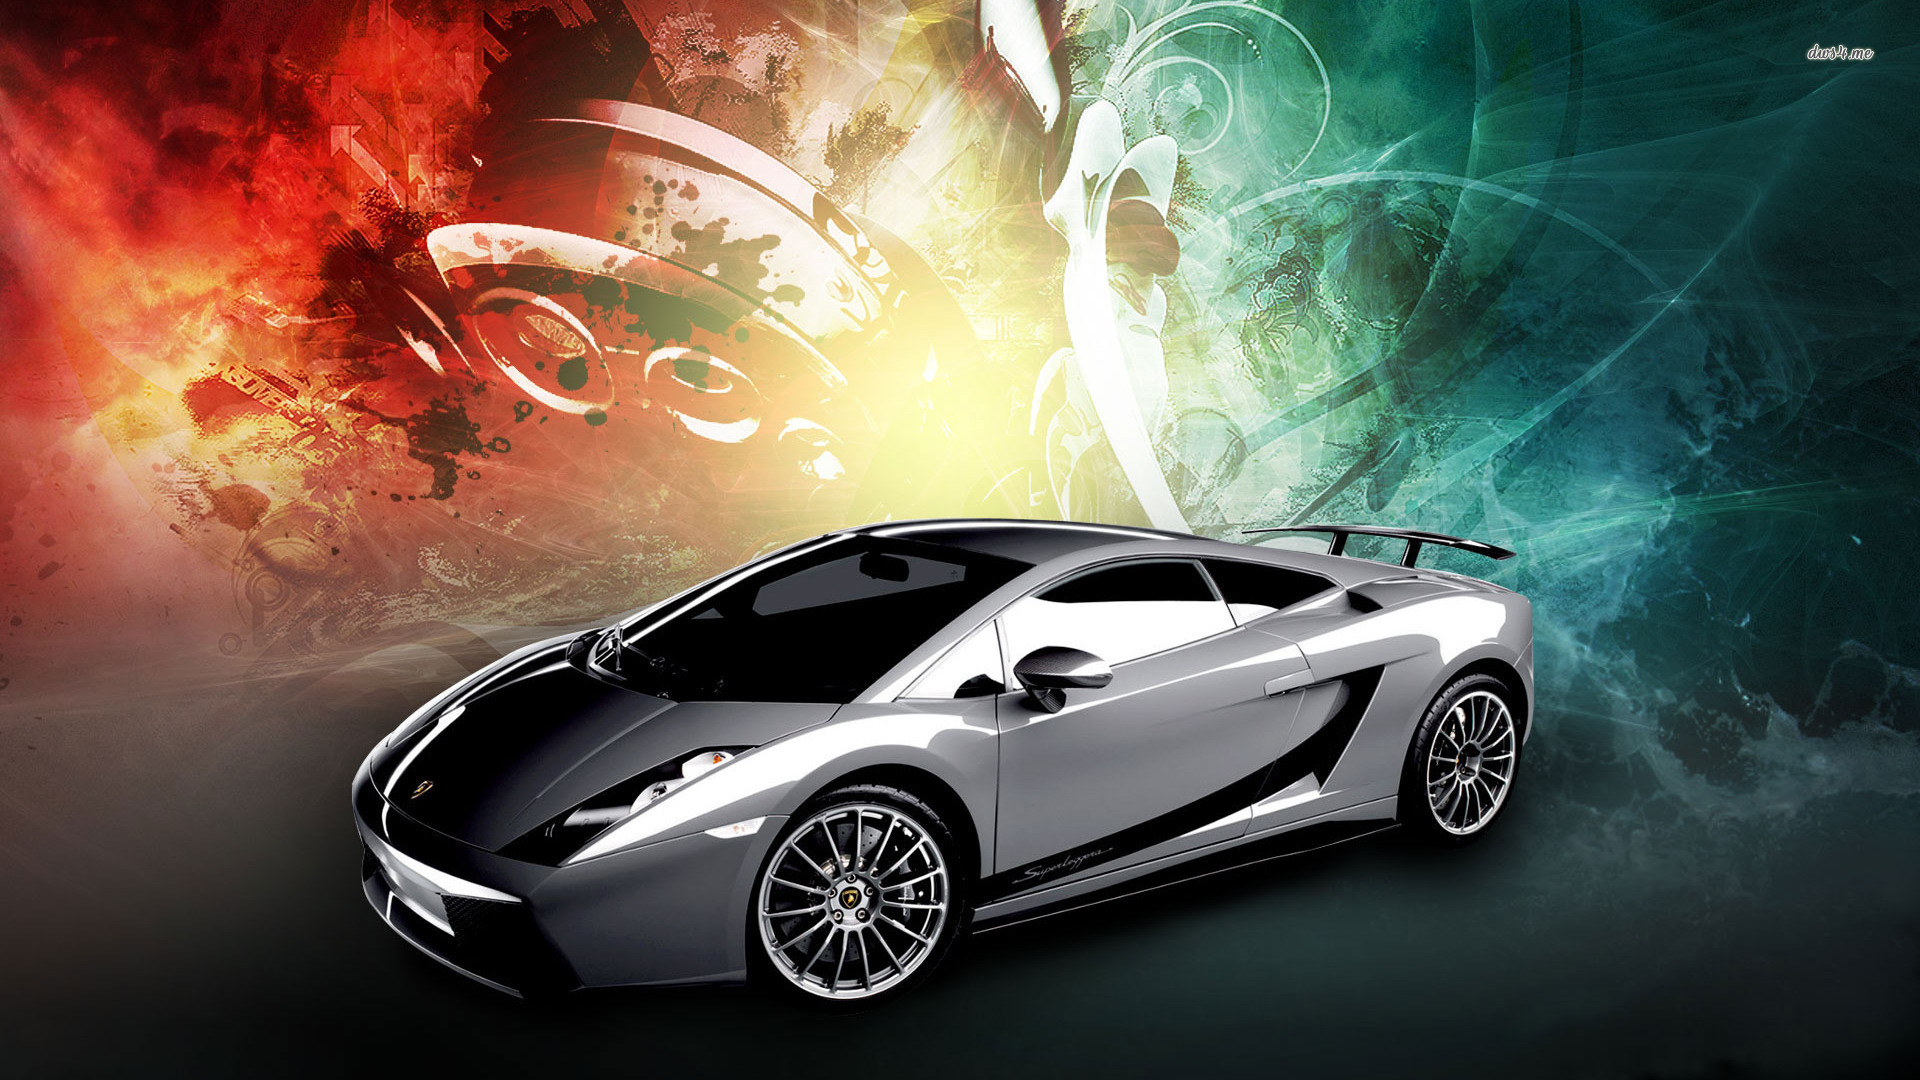 Hd Lamborghini Car Wallpapers) - Hd Wallpapers Of Cars For Windows 10 , HD Wallpaper & Backgrounds